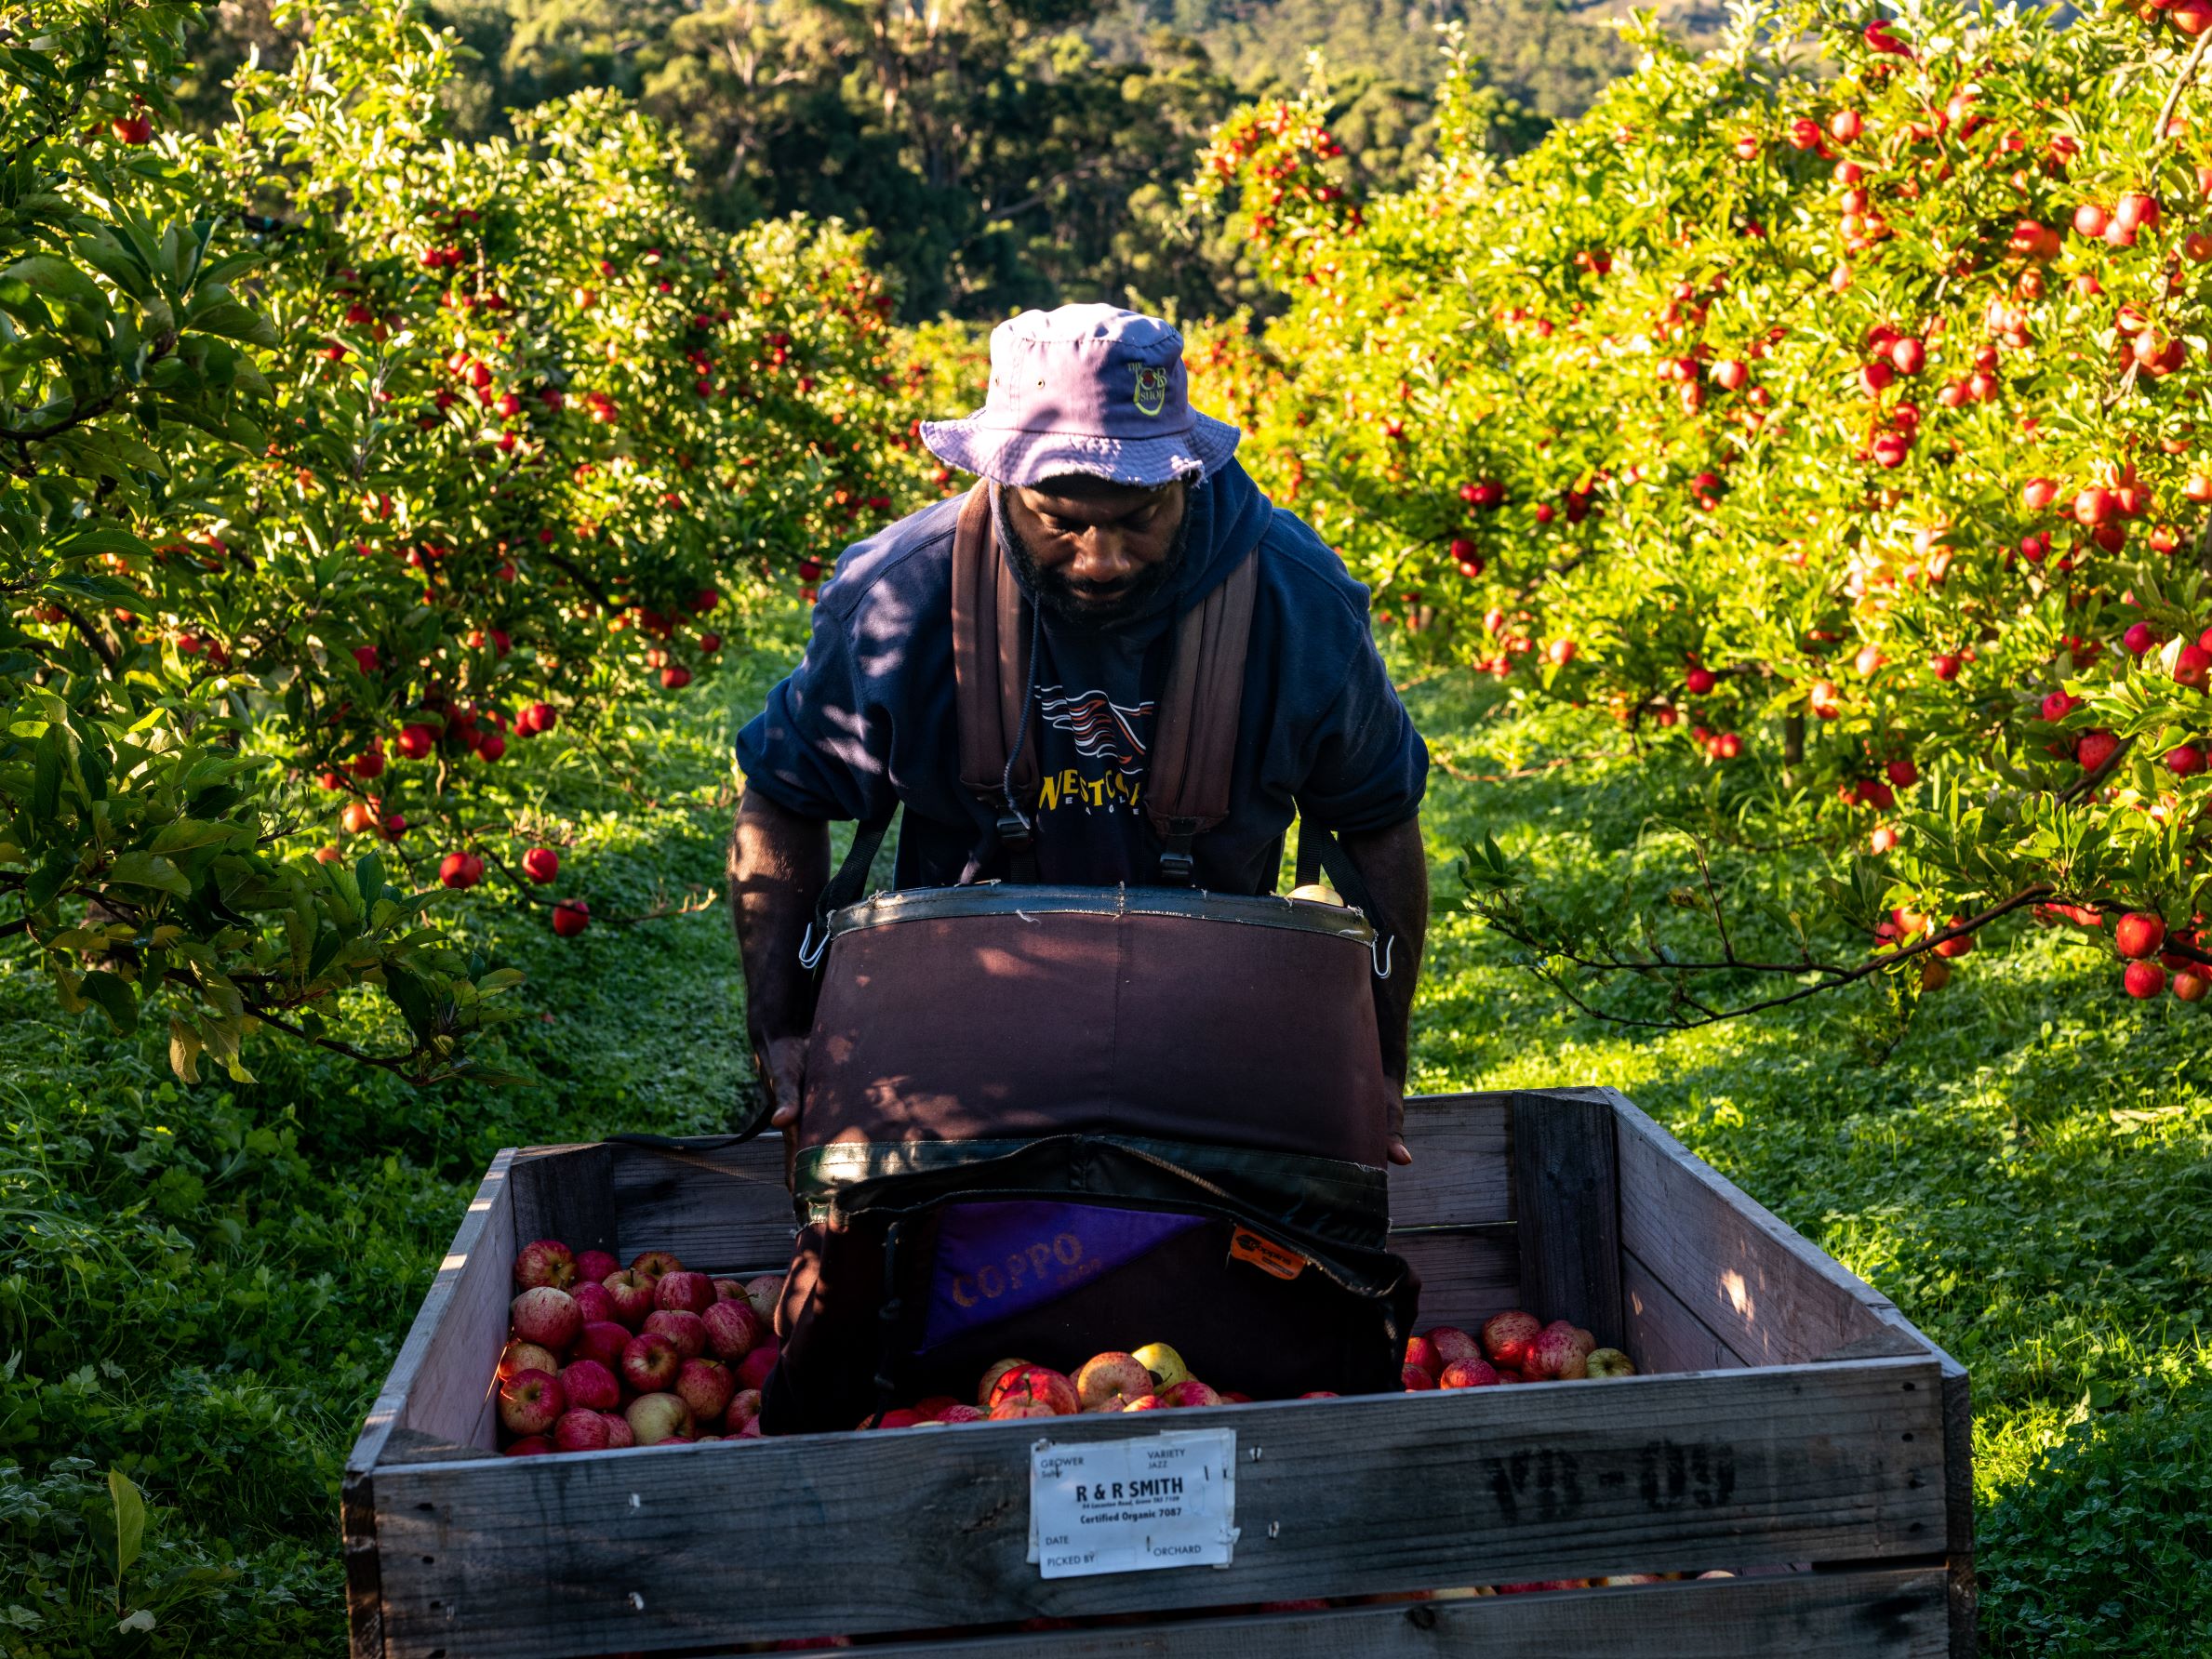 R&R Smith harvest - Pacific Island Apple Picker 